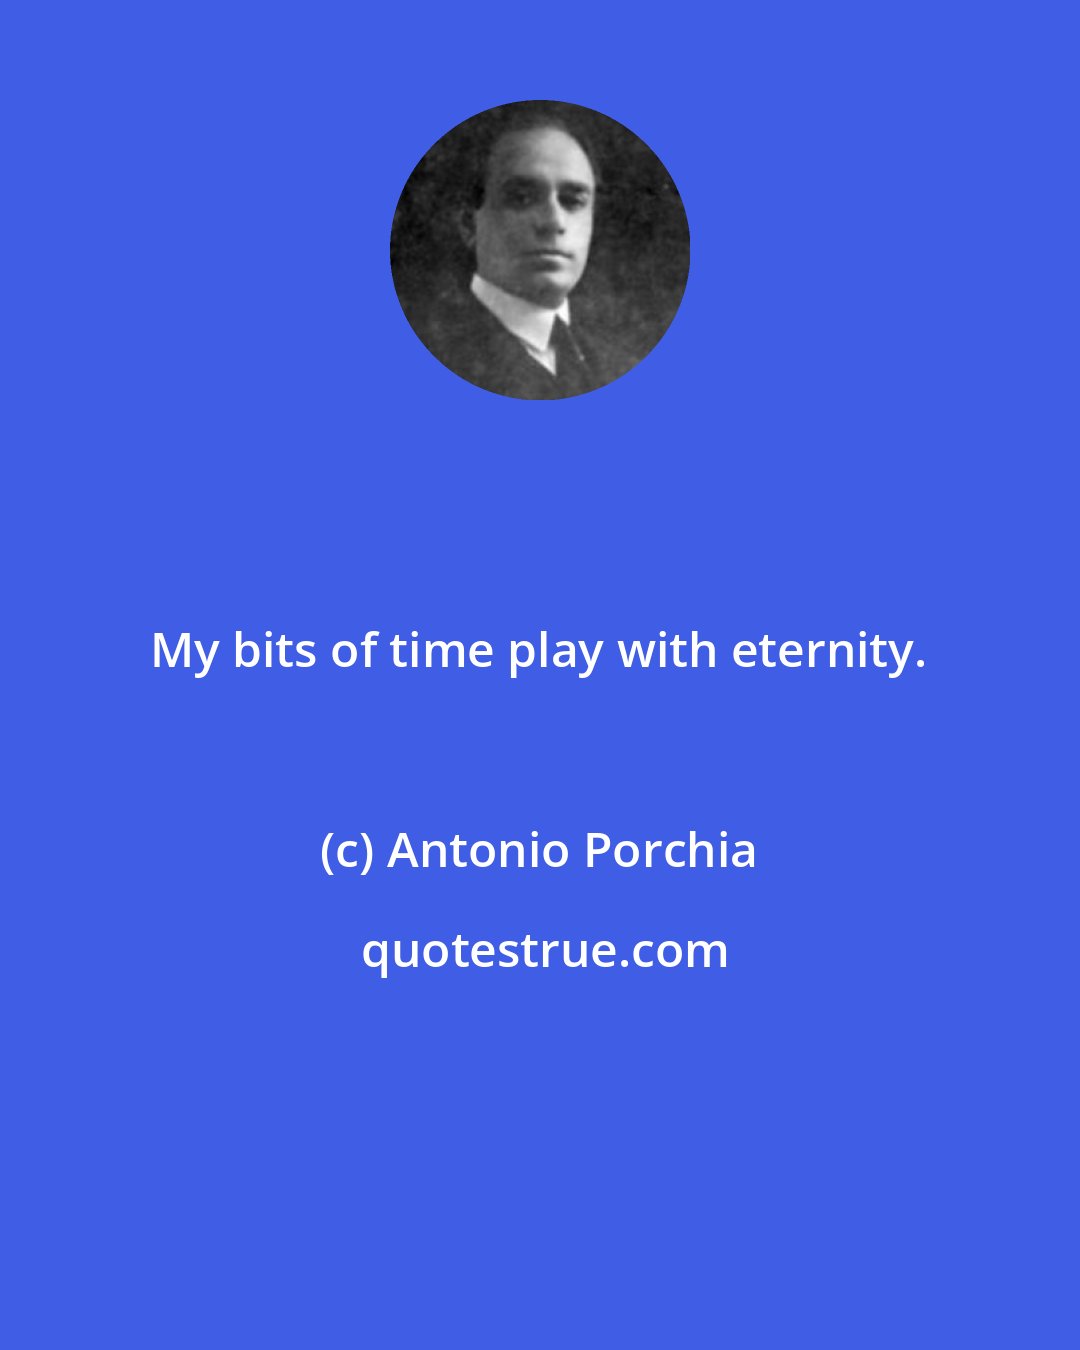 Antonio Porchia: My bits of time play with eternity.